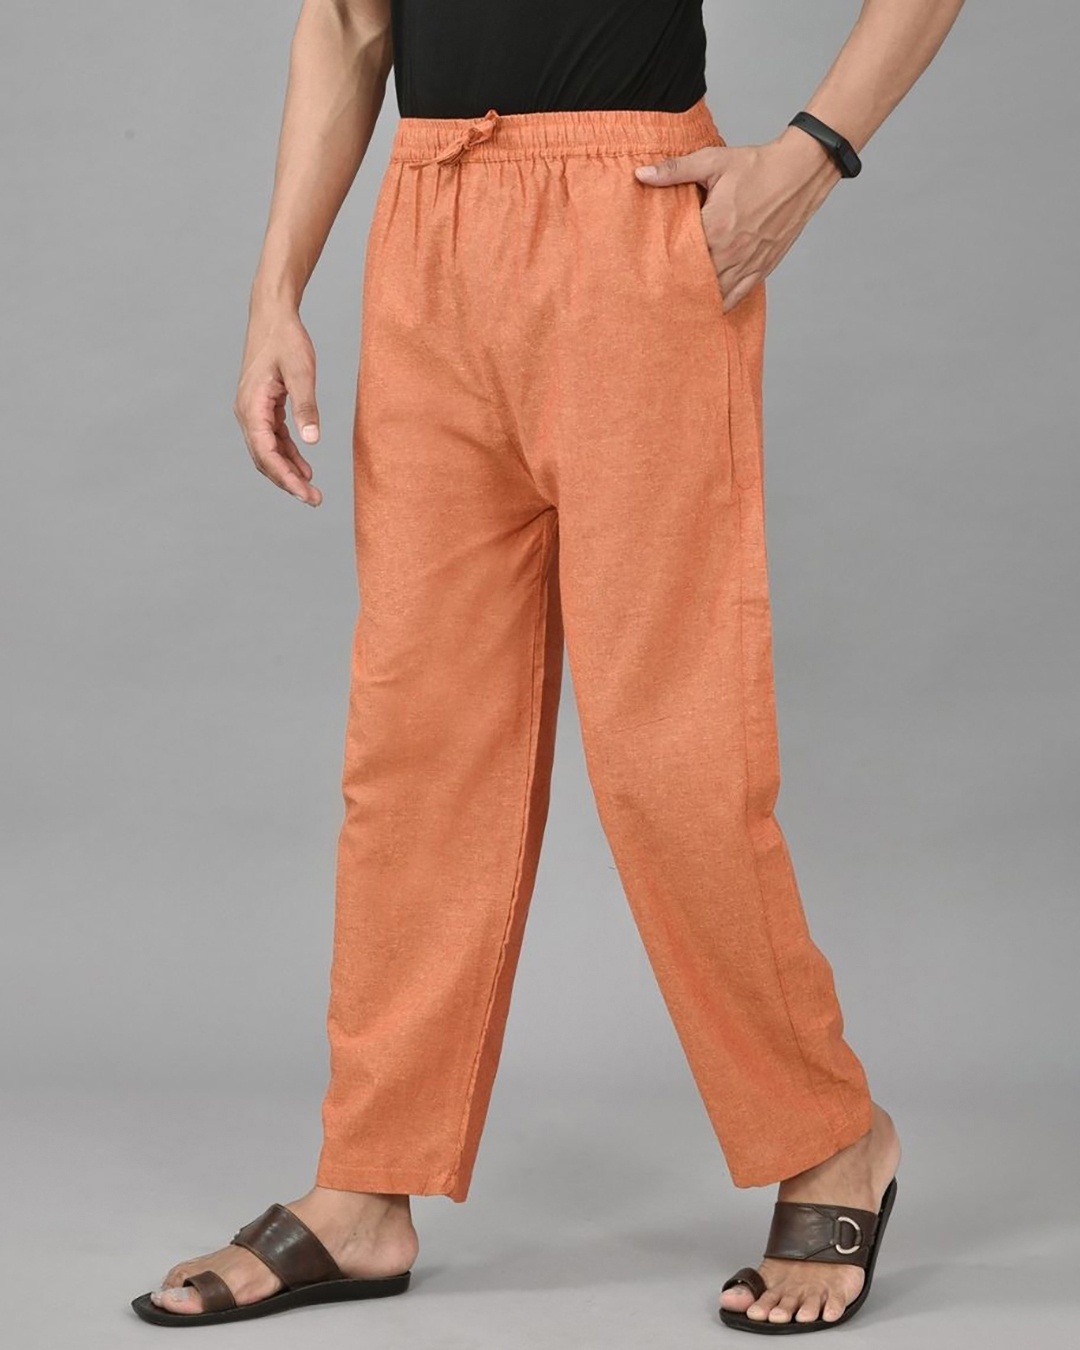 men s orange trousers 585004 1679576292 1